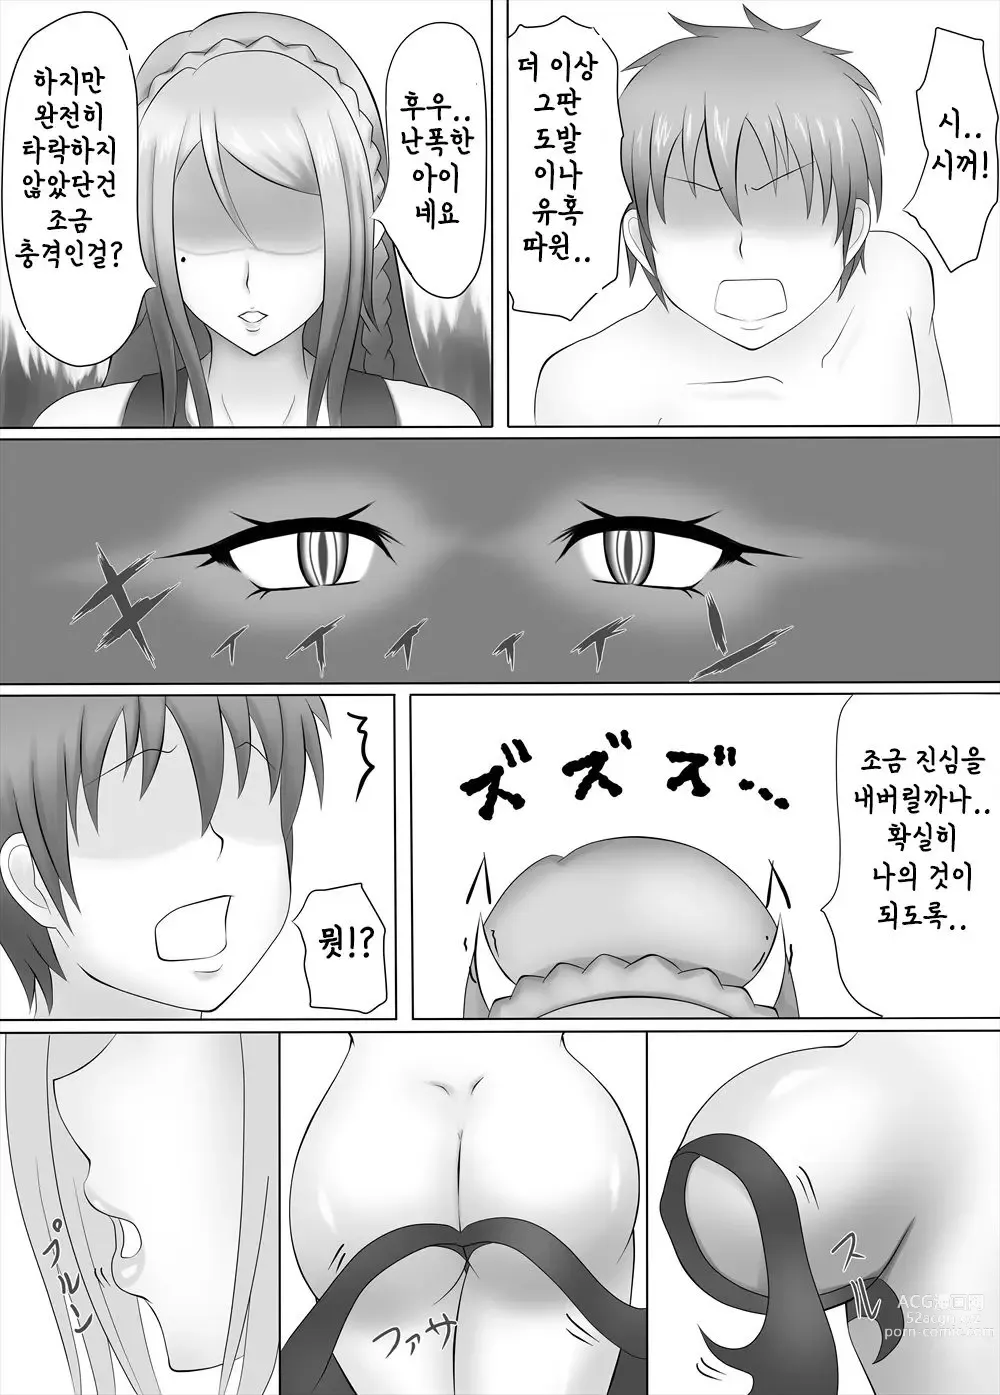 Page 3 of doujinshi 서큐버스의 드레인 에스테틱 ~팬북~